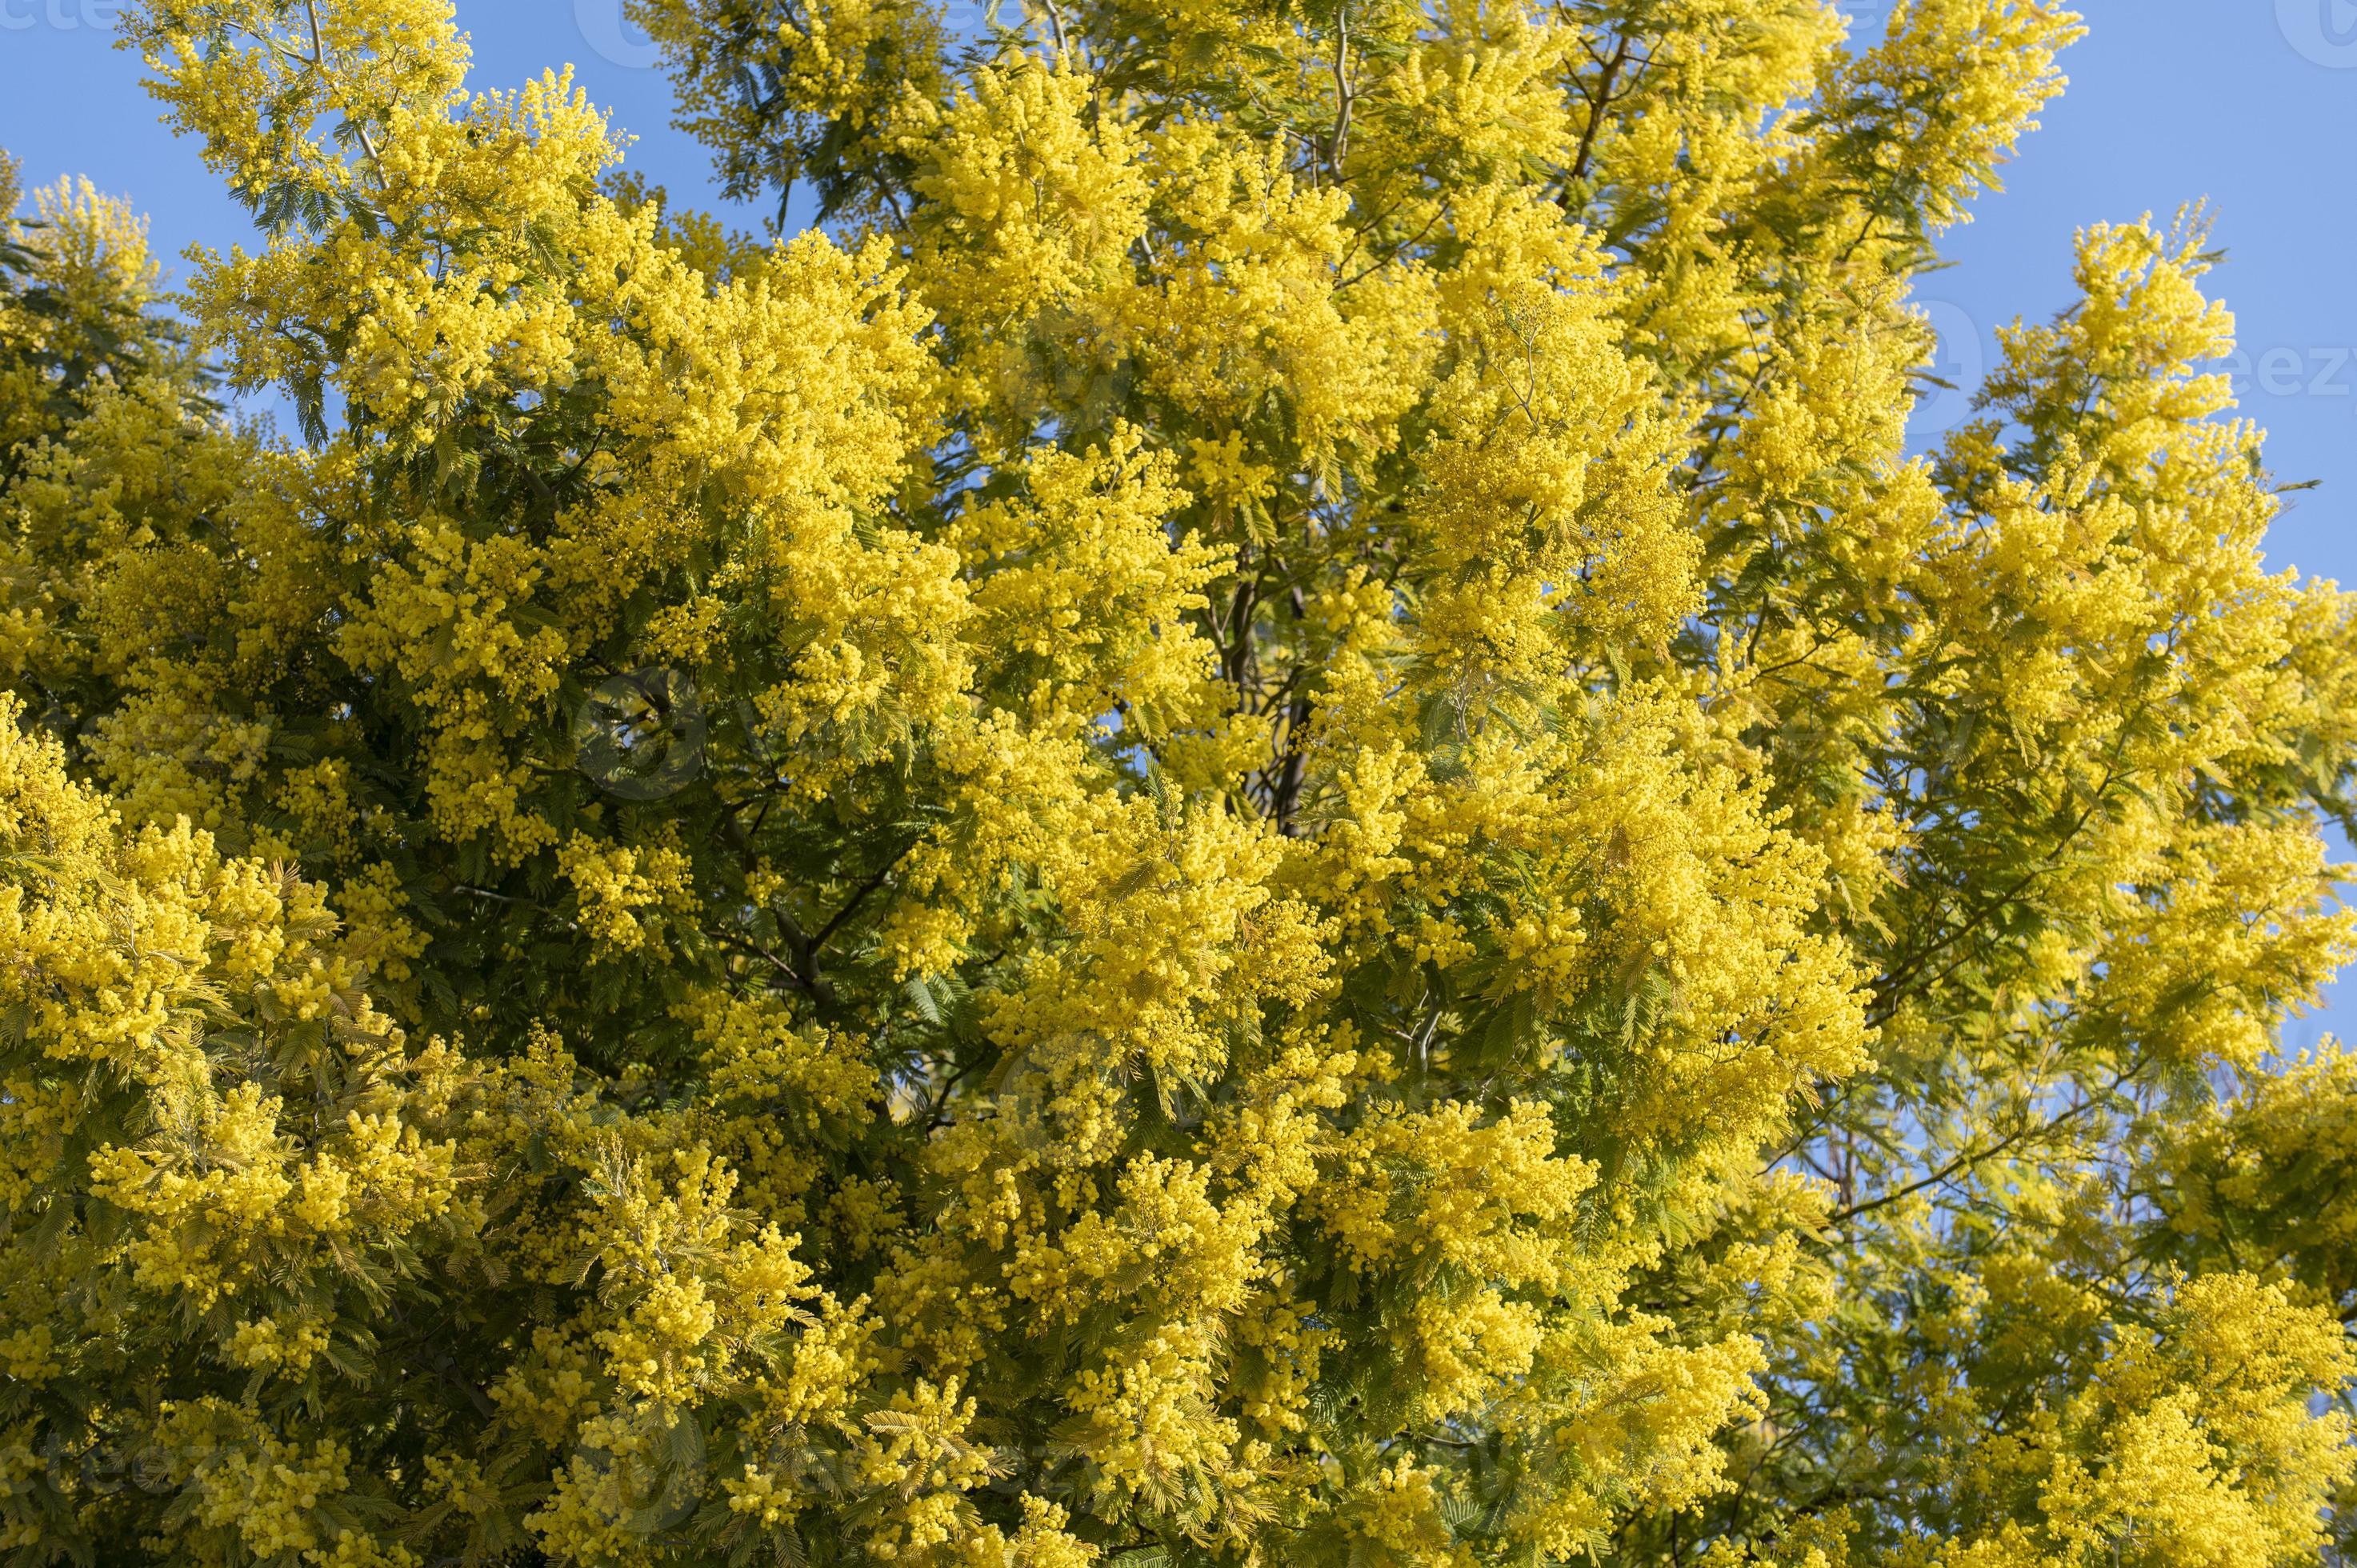 planta mimosa com uma cor amarela intensa 2689840 Foto de stock no Vecteezy